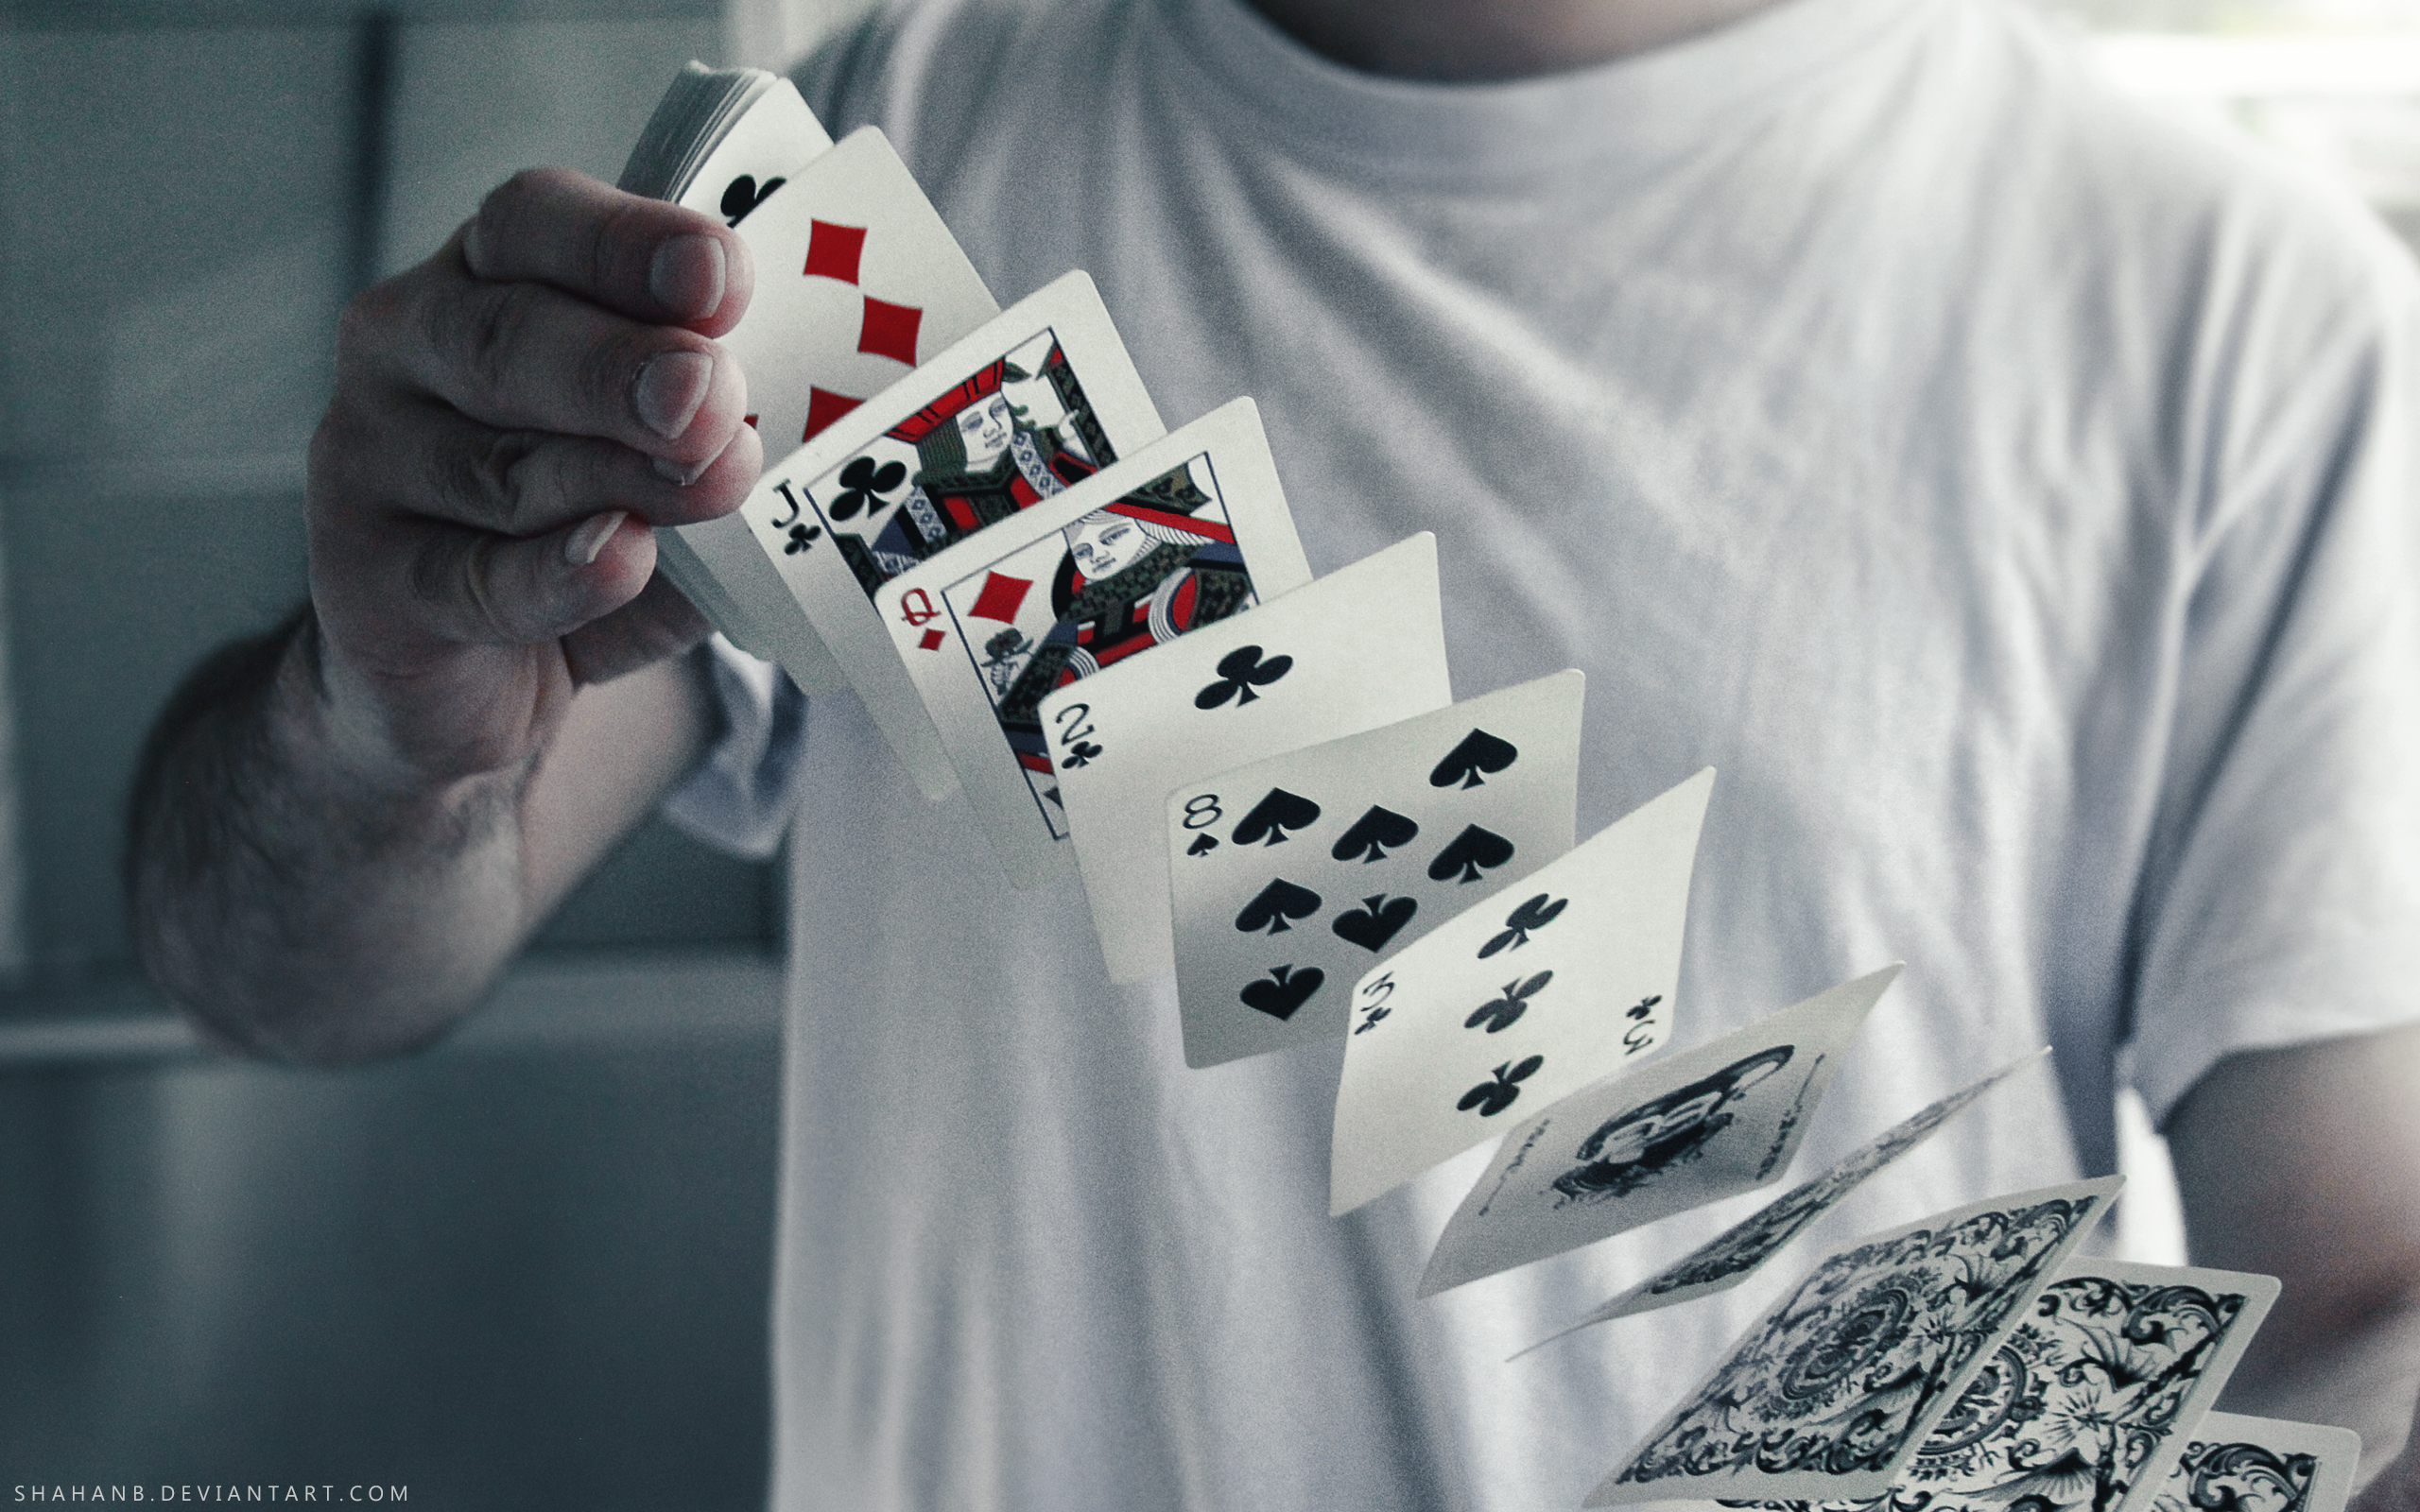 card wallpaper,games,gambling,t shirt,card game,poker